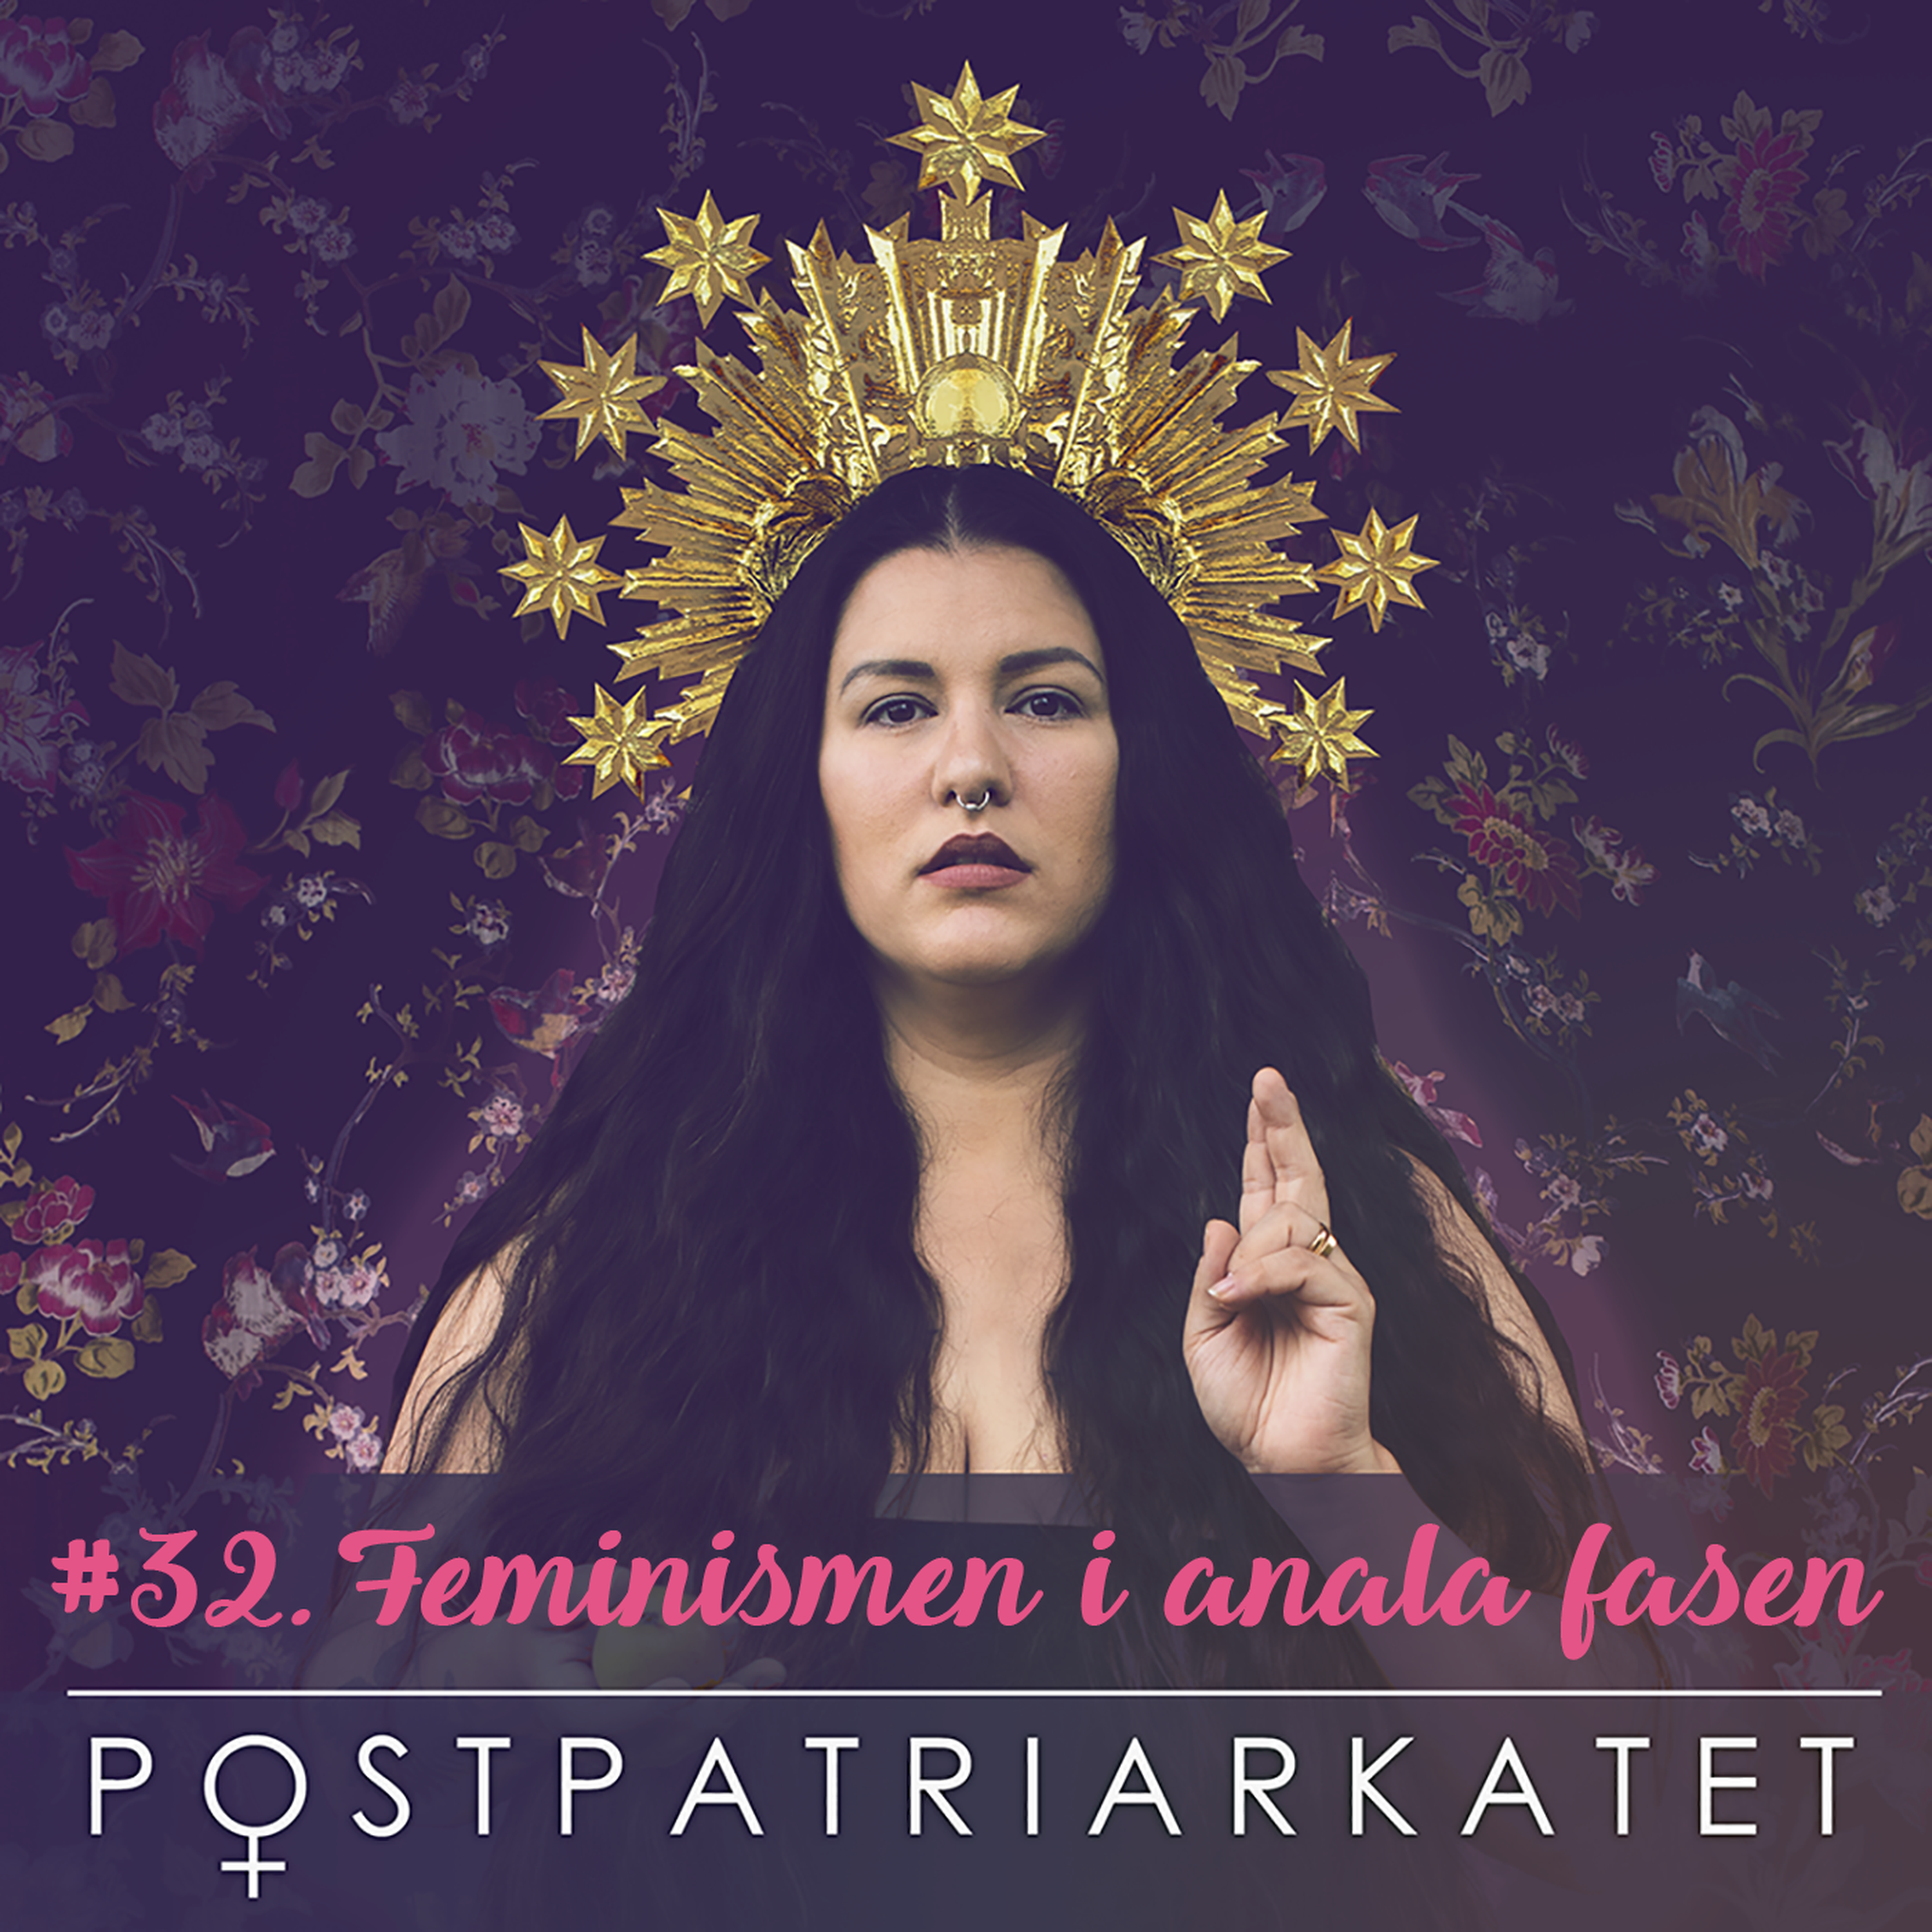 Feminismen i anala fasen - #32